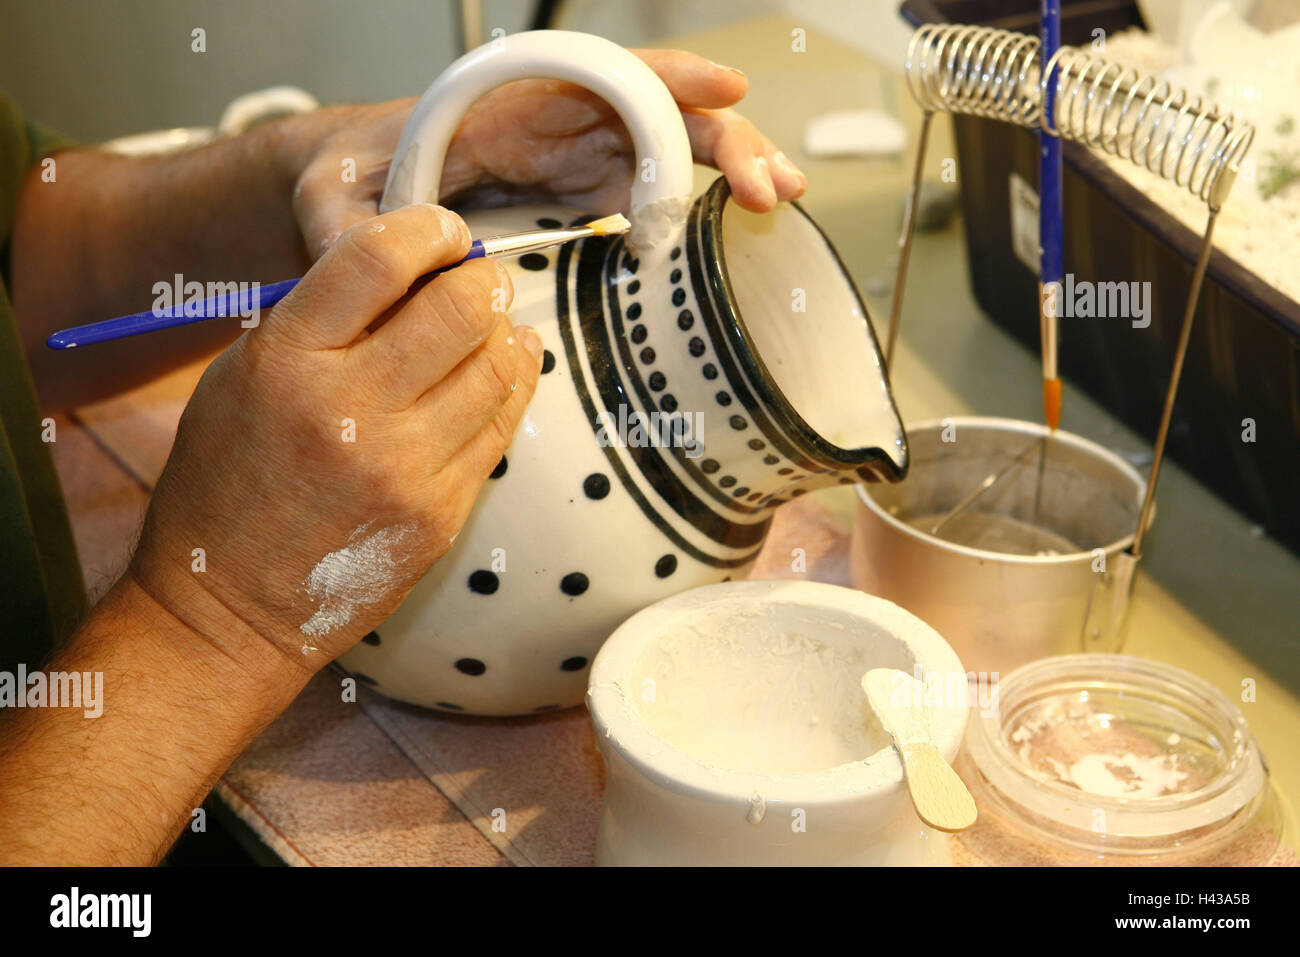 Potter garage, man, ceramics jug, restore, detail, hands, people, man's hands, jug, ceramics, broken, mend, repair, skill, manual labour, craftsmen, ceramics restoration, inside, Stock Photo